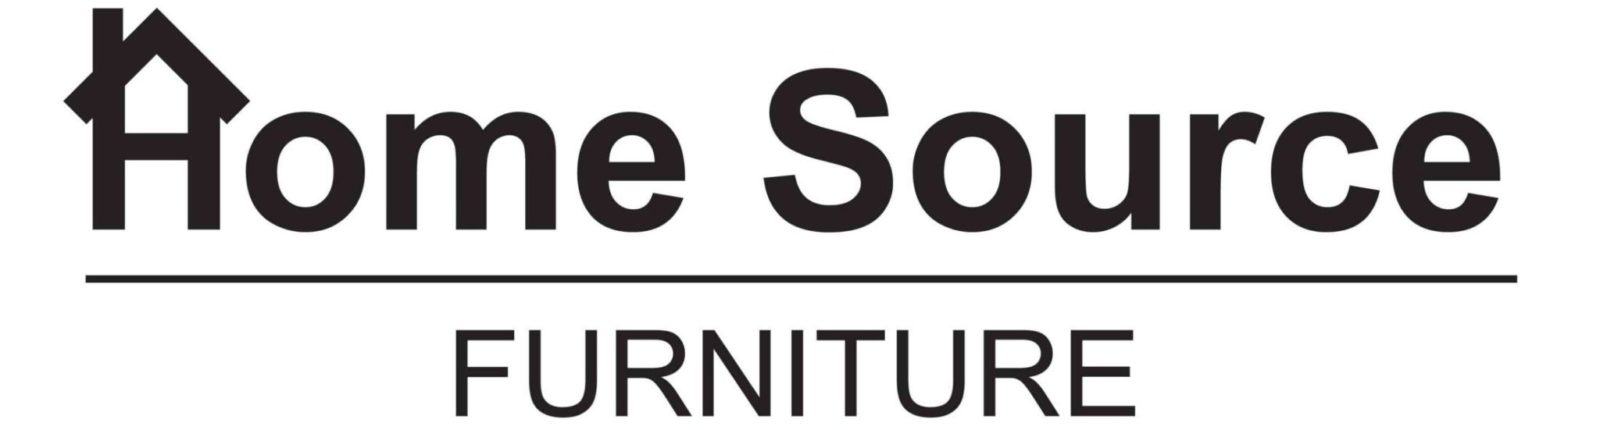 Home Source Furniture - Houston, TX